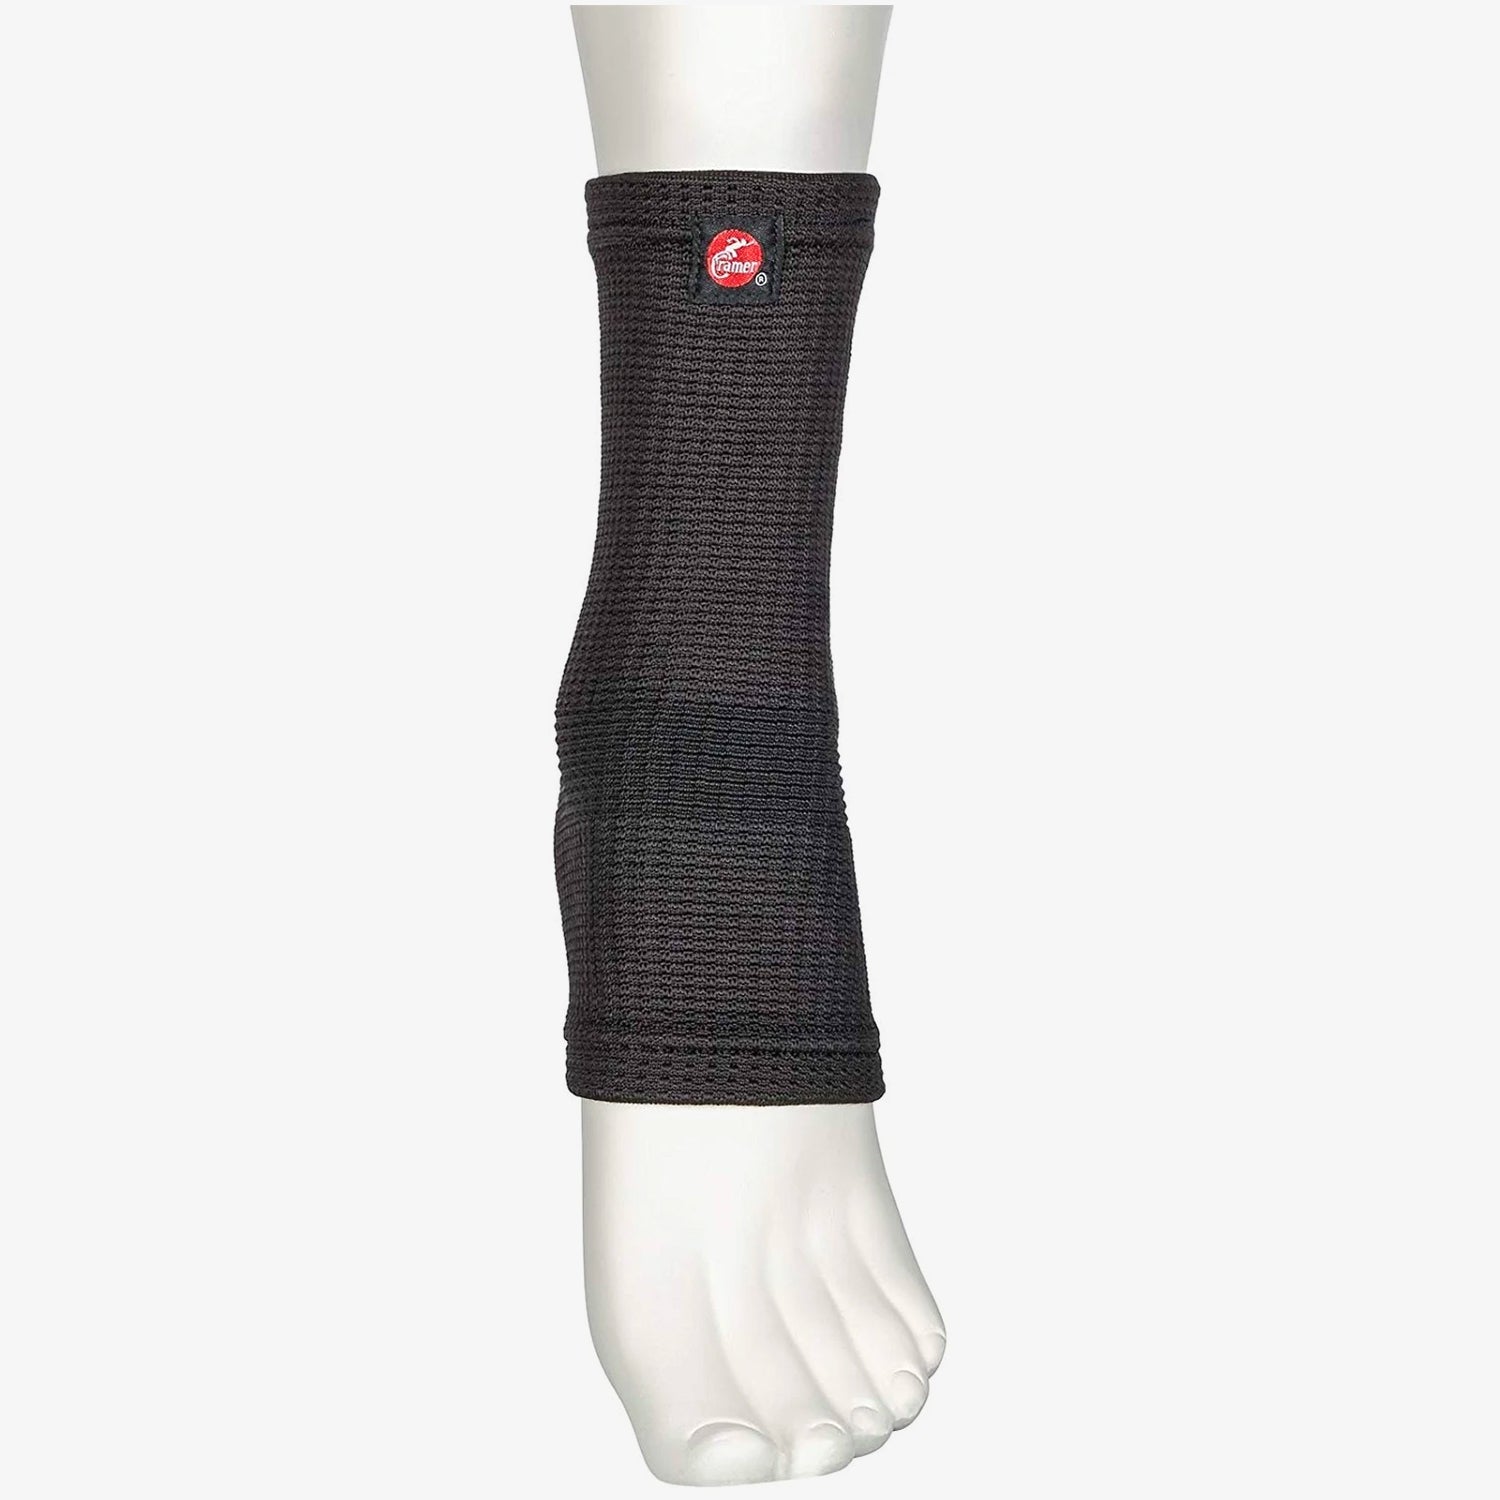 Nano Flex Ankle Support Medium - Black